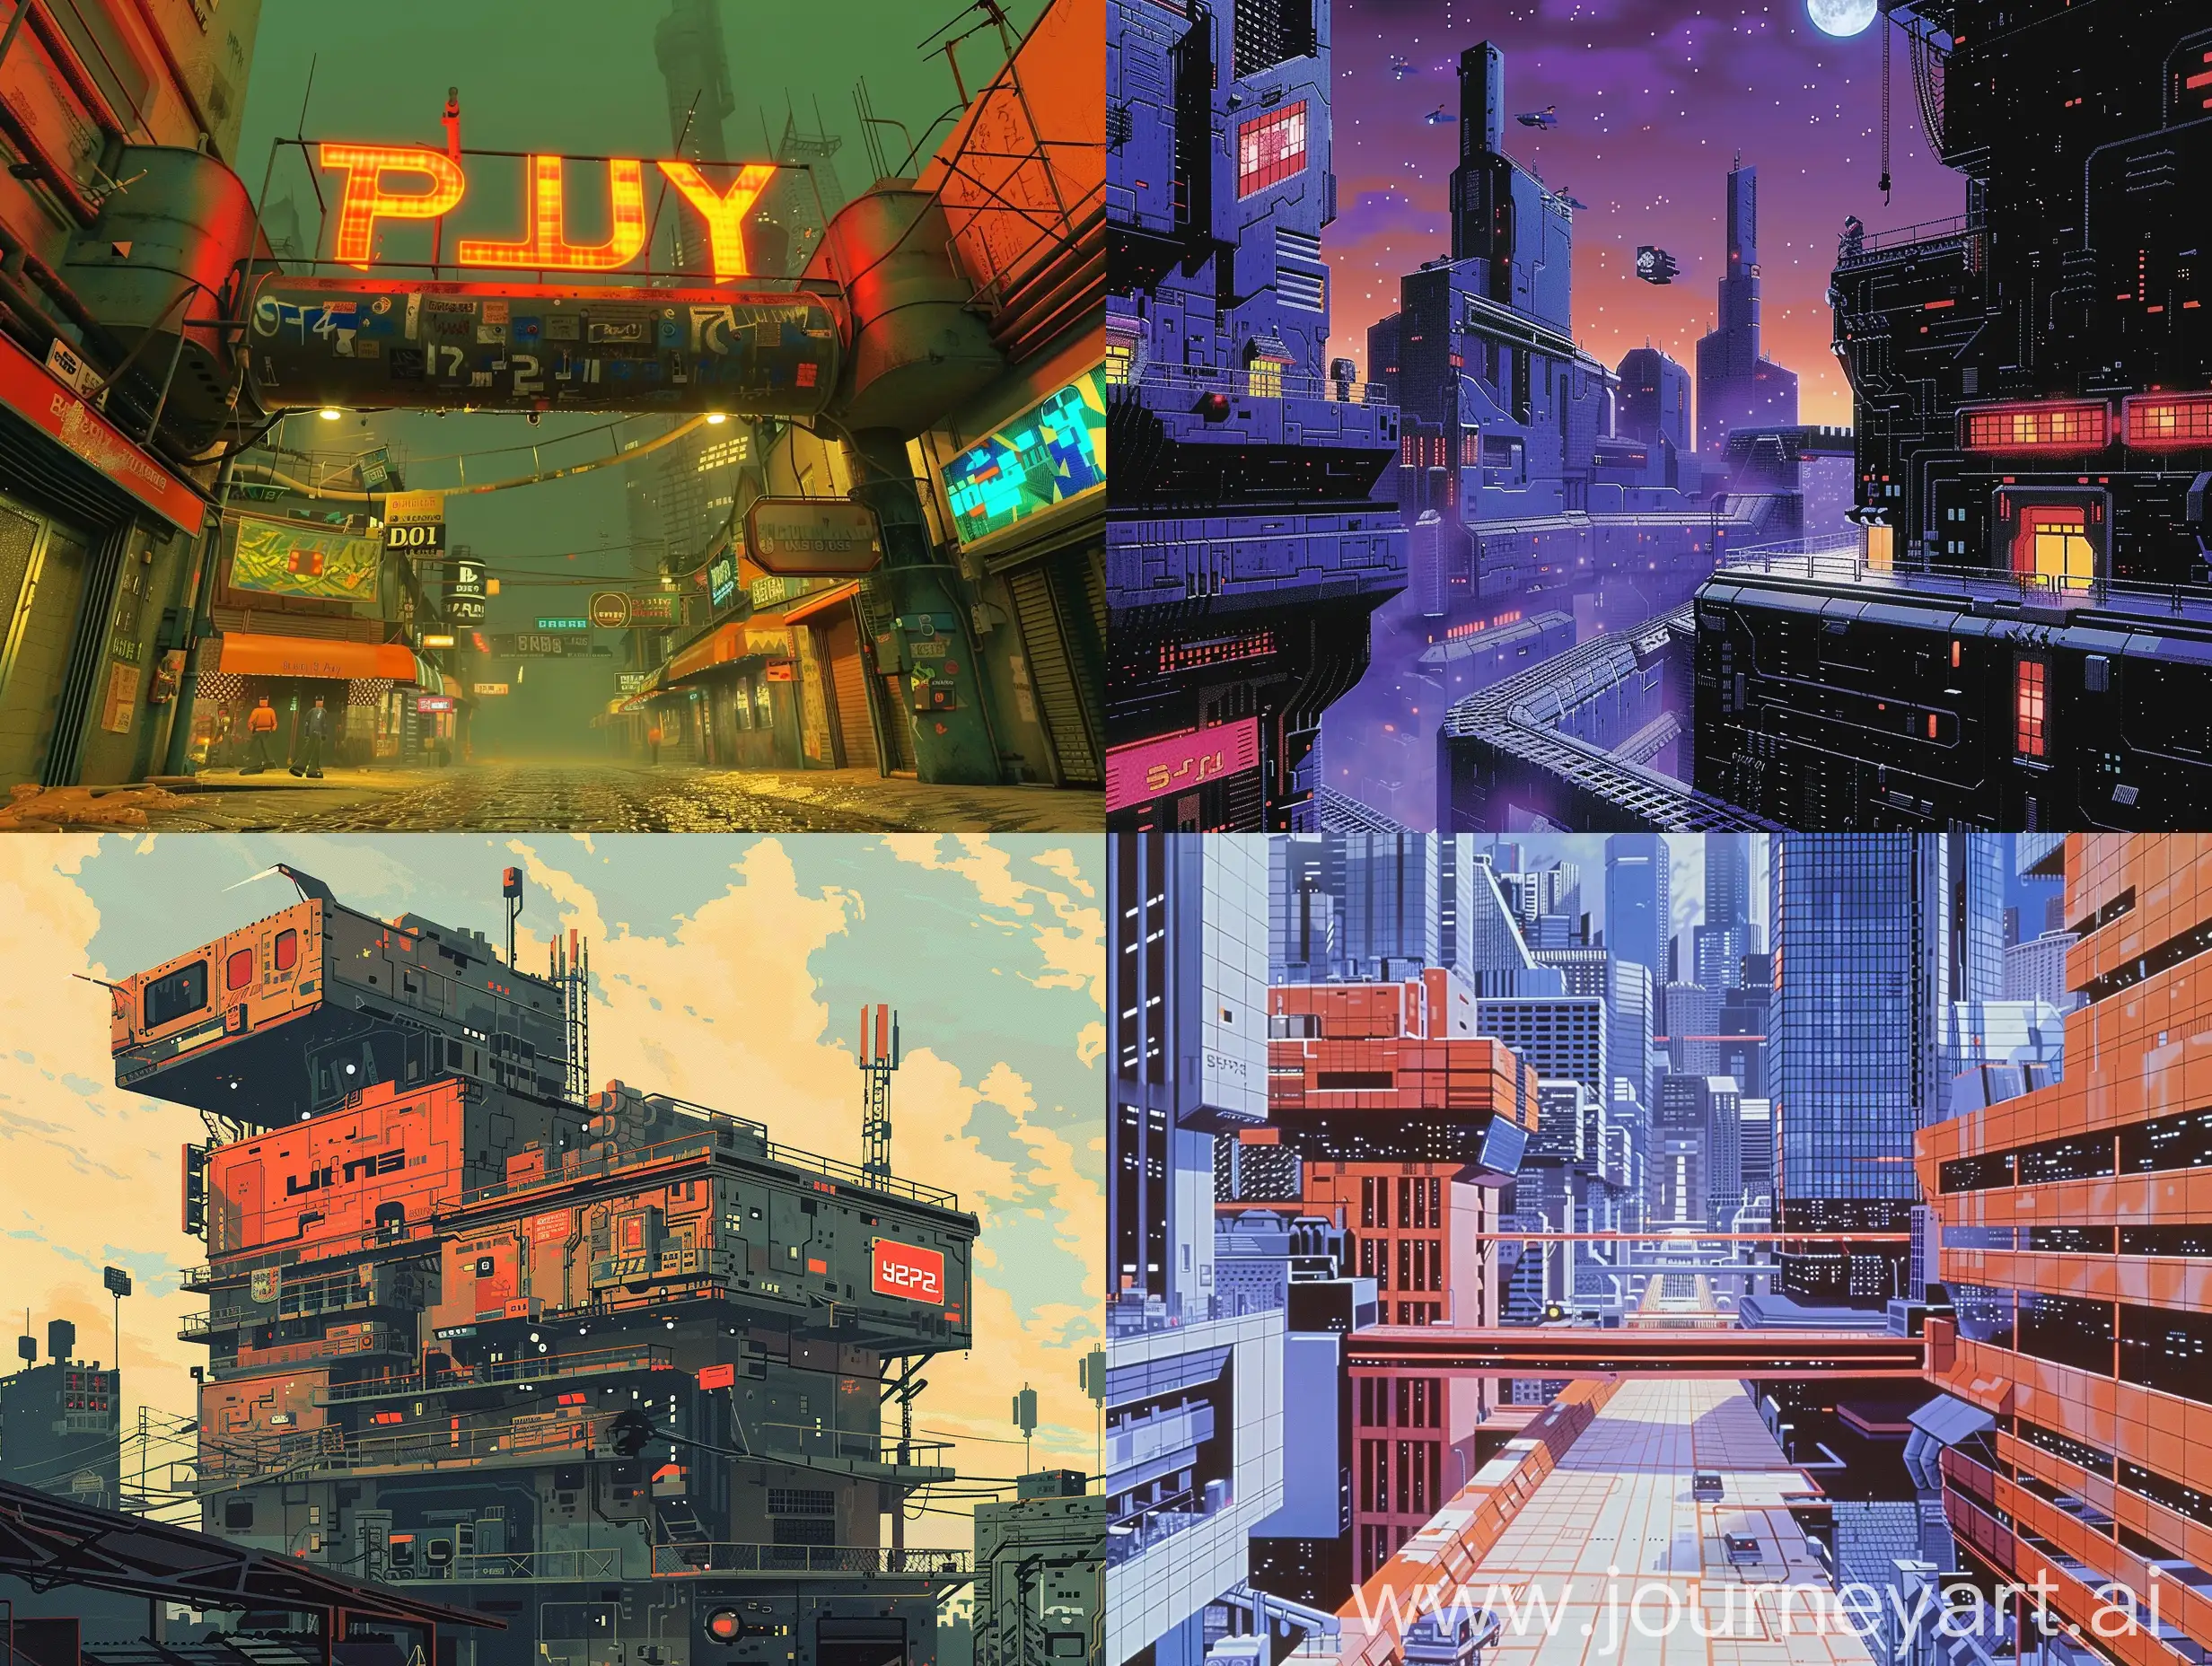  PlayStation 2 graphics of a city, genre, retro, modern, futurism, y2k aesthetic, nostalgic trend, environment, PlayStation 2, 2000s graphics, ambient, playstation 1 graphics